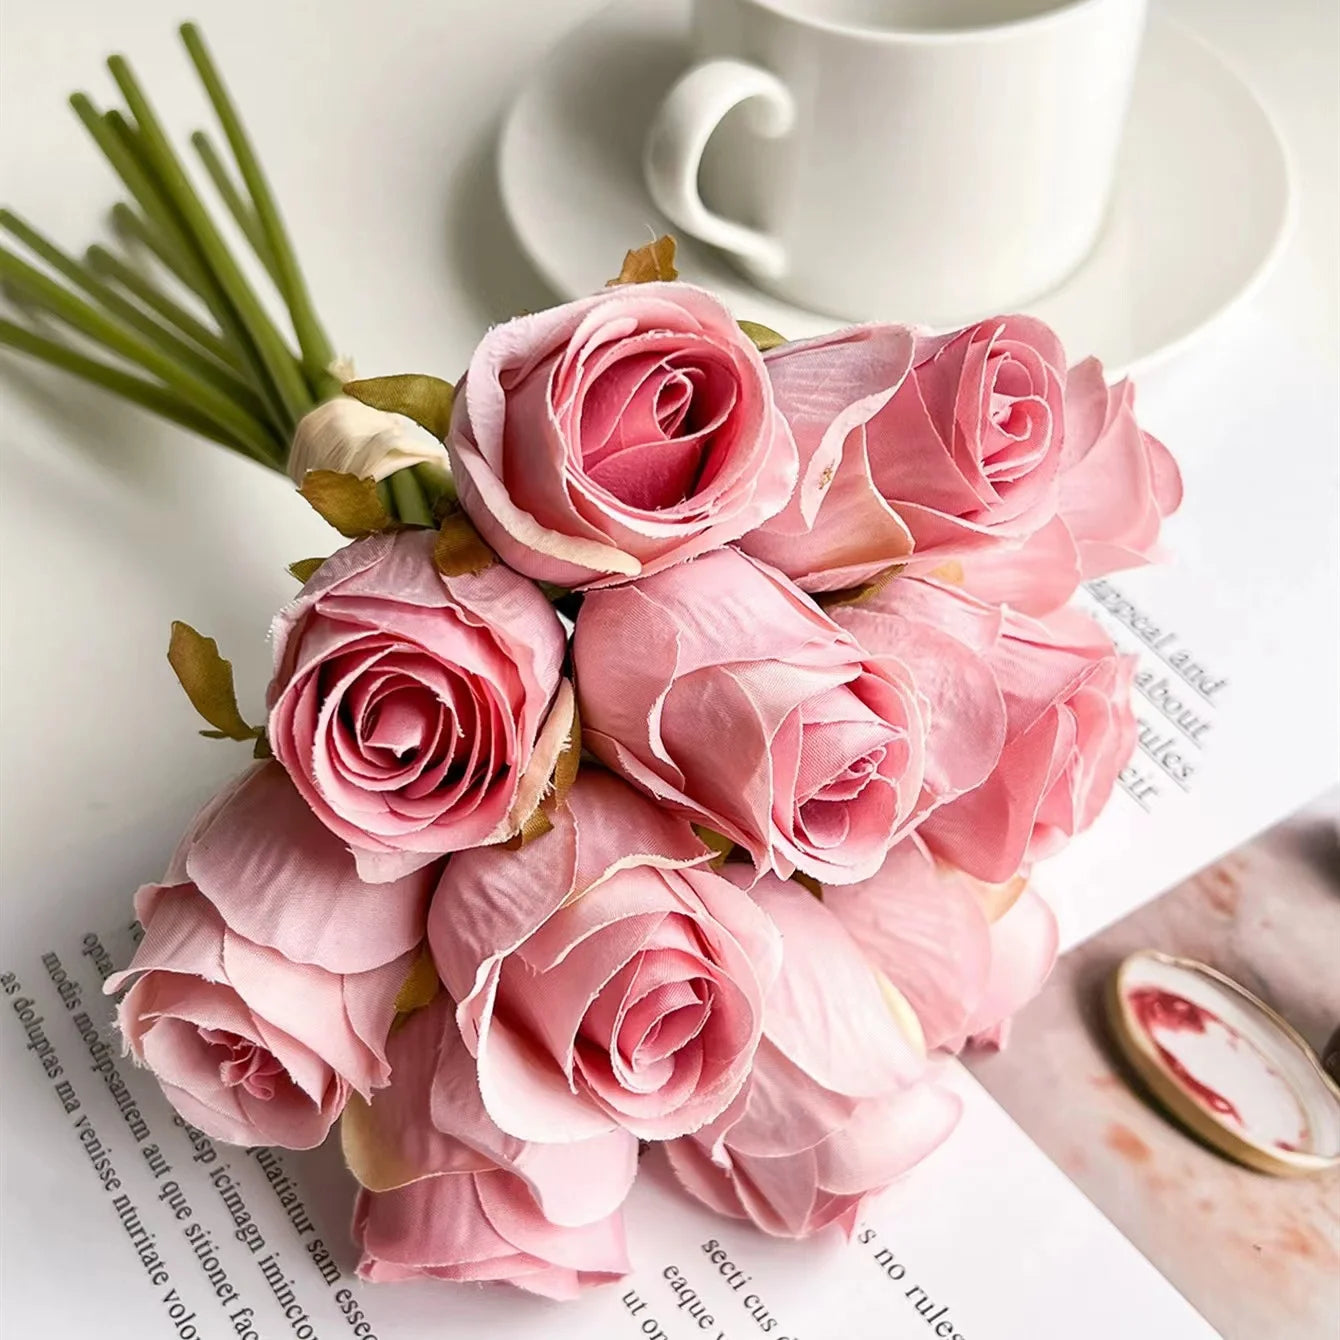 12 Pieces Of Simulation Handmade Rose Valentine's Day